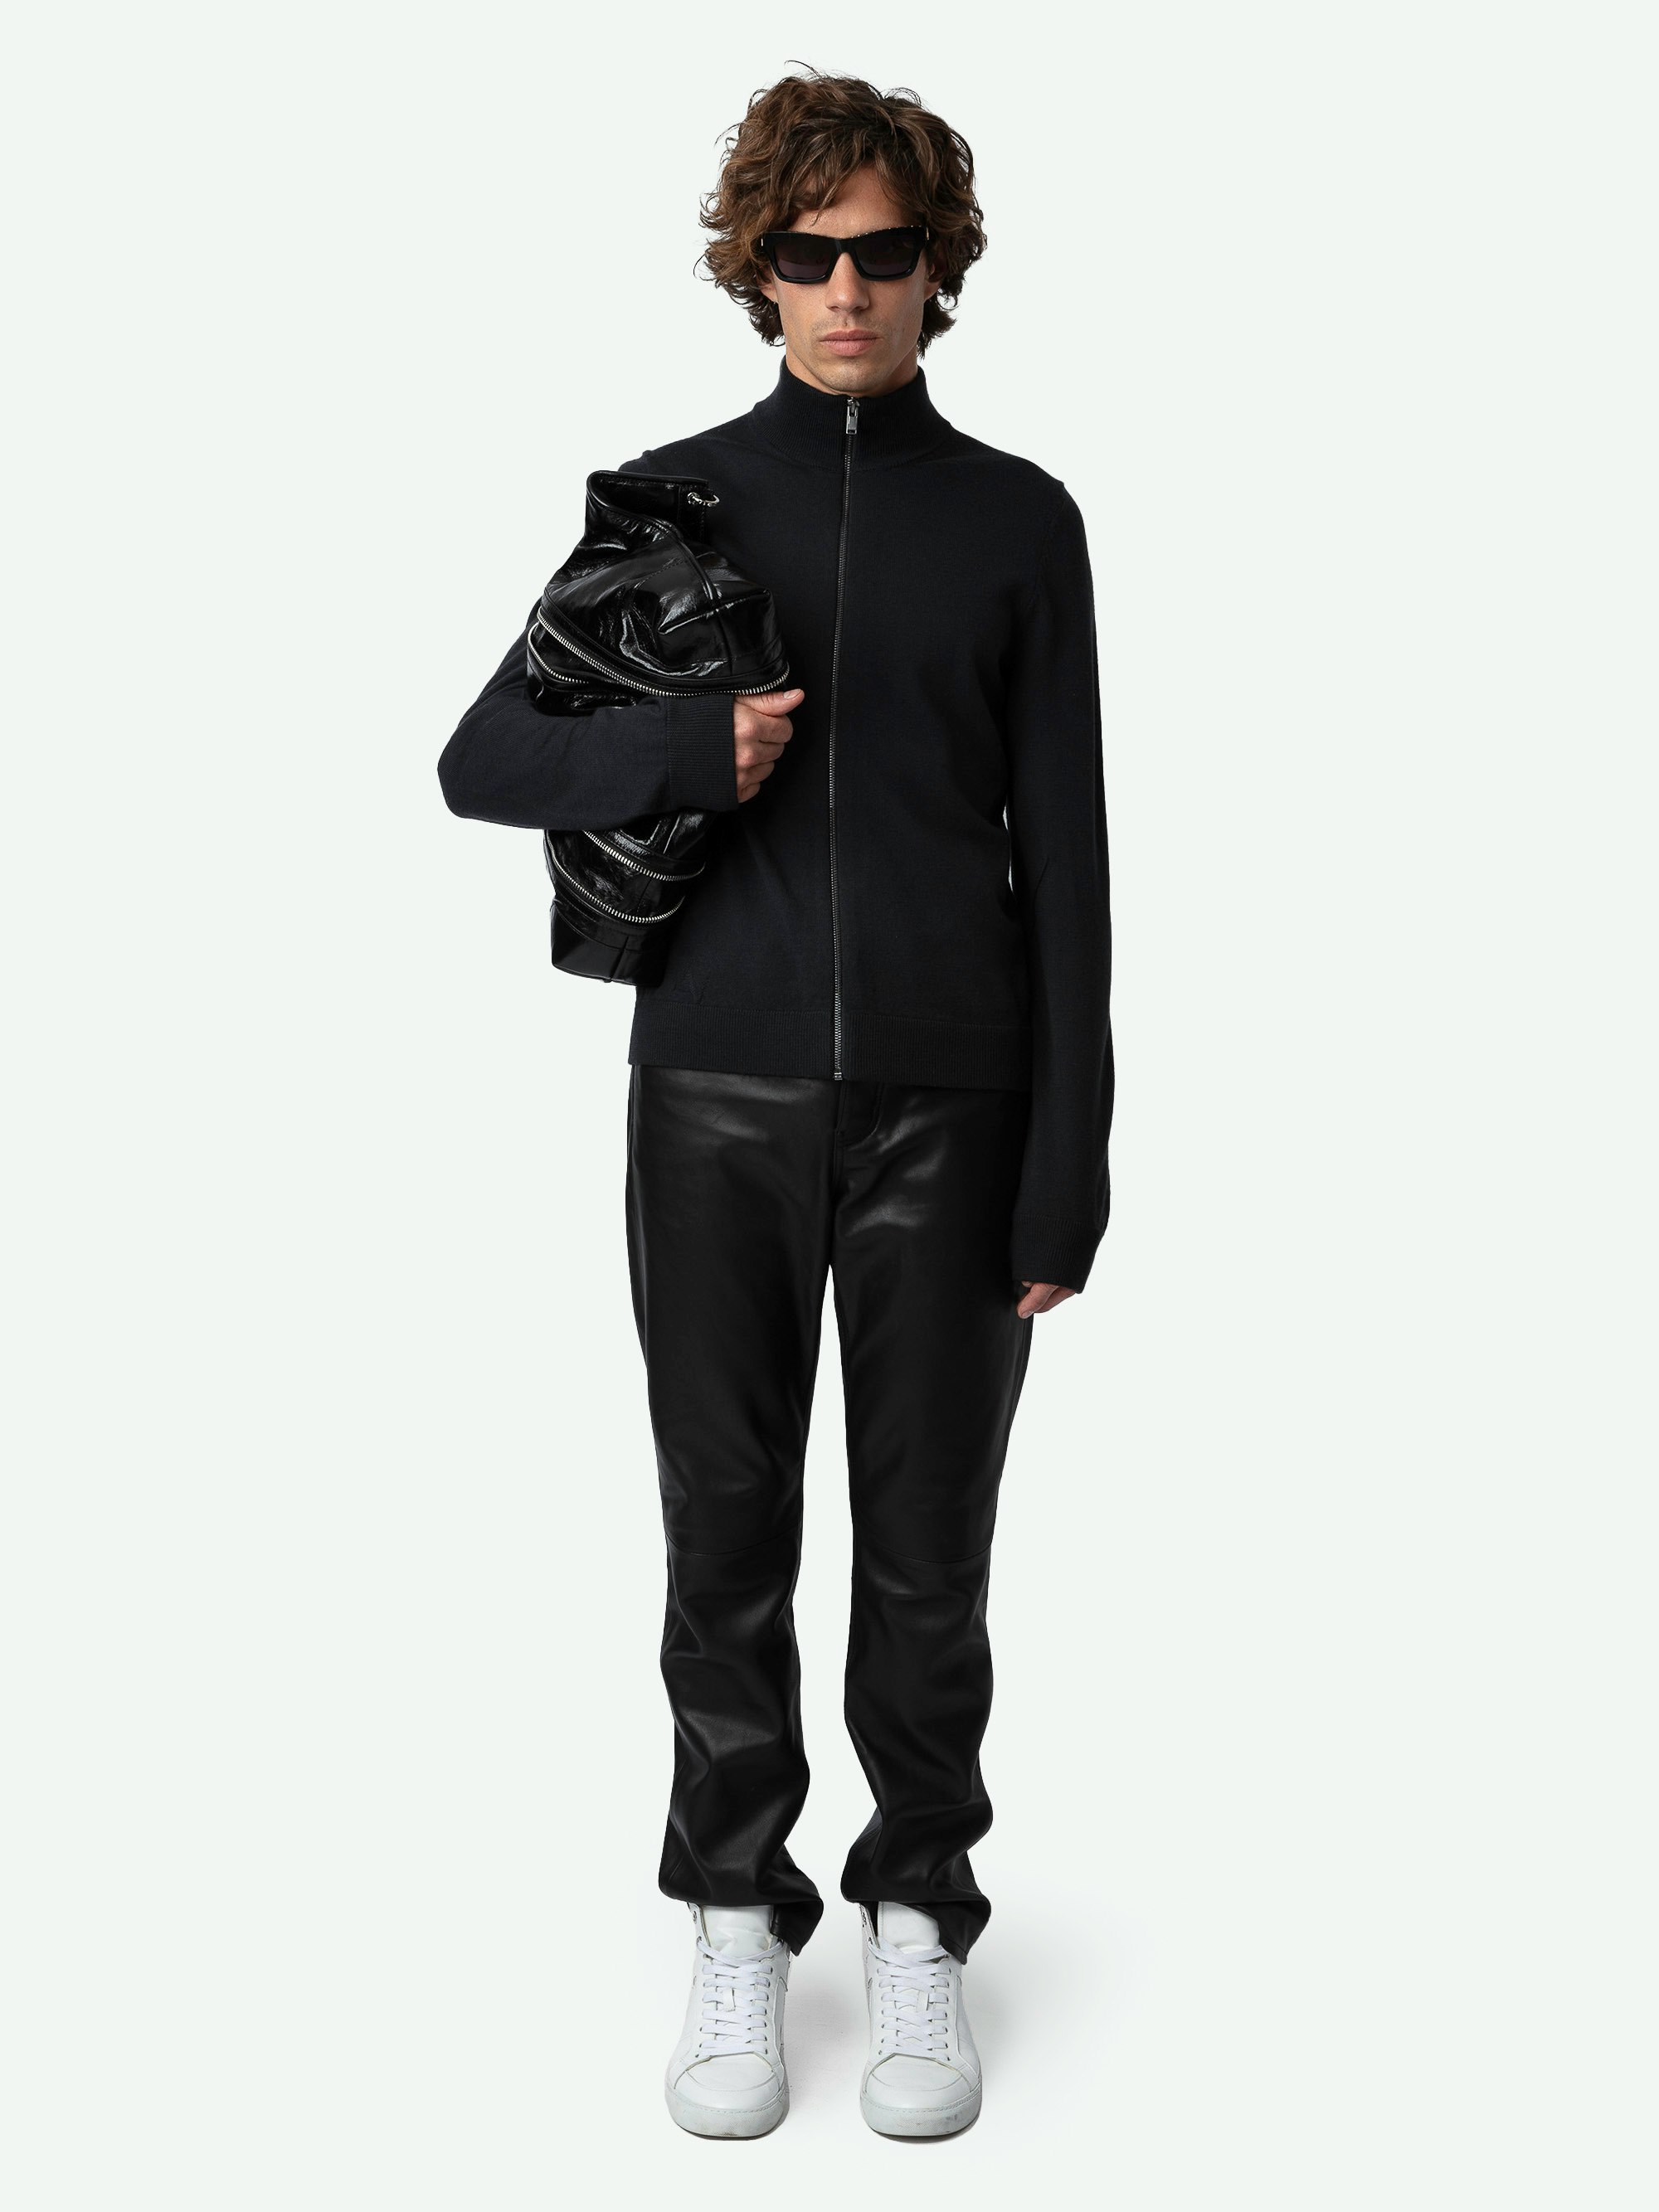 Charly Studio Cardigan - Long-sleeved high collar dark grey merino wool zip-up cardigan with Studio print on the back.